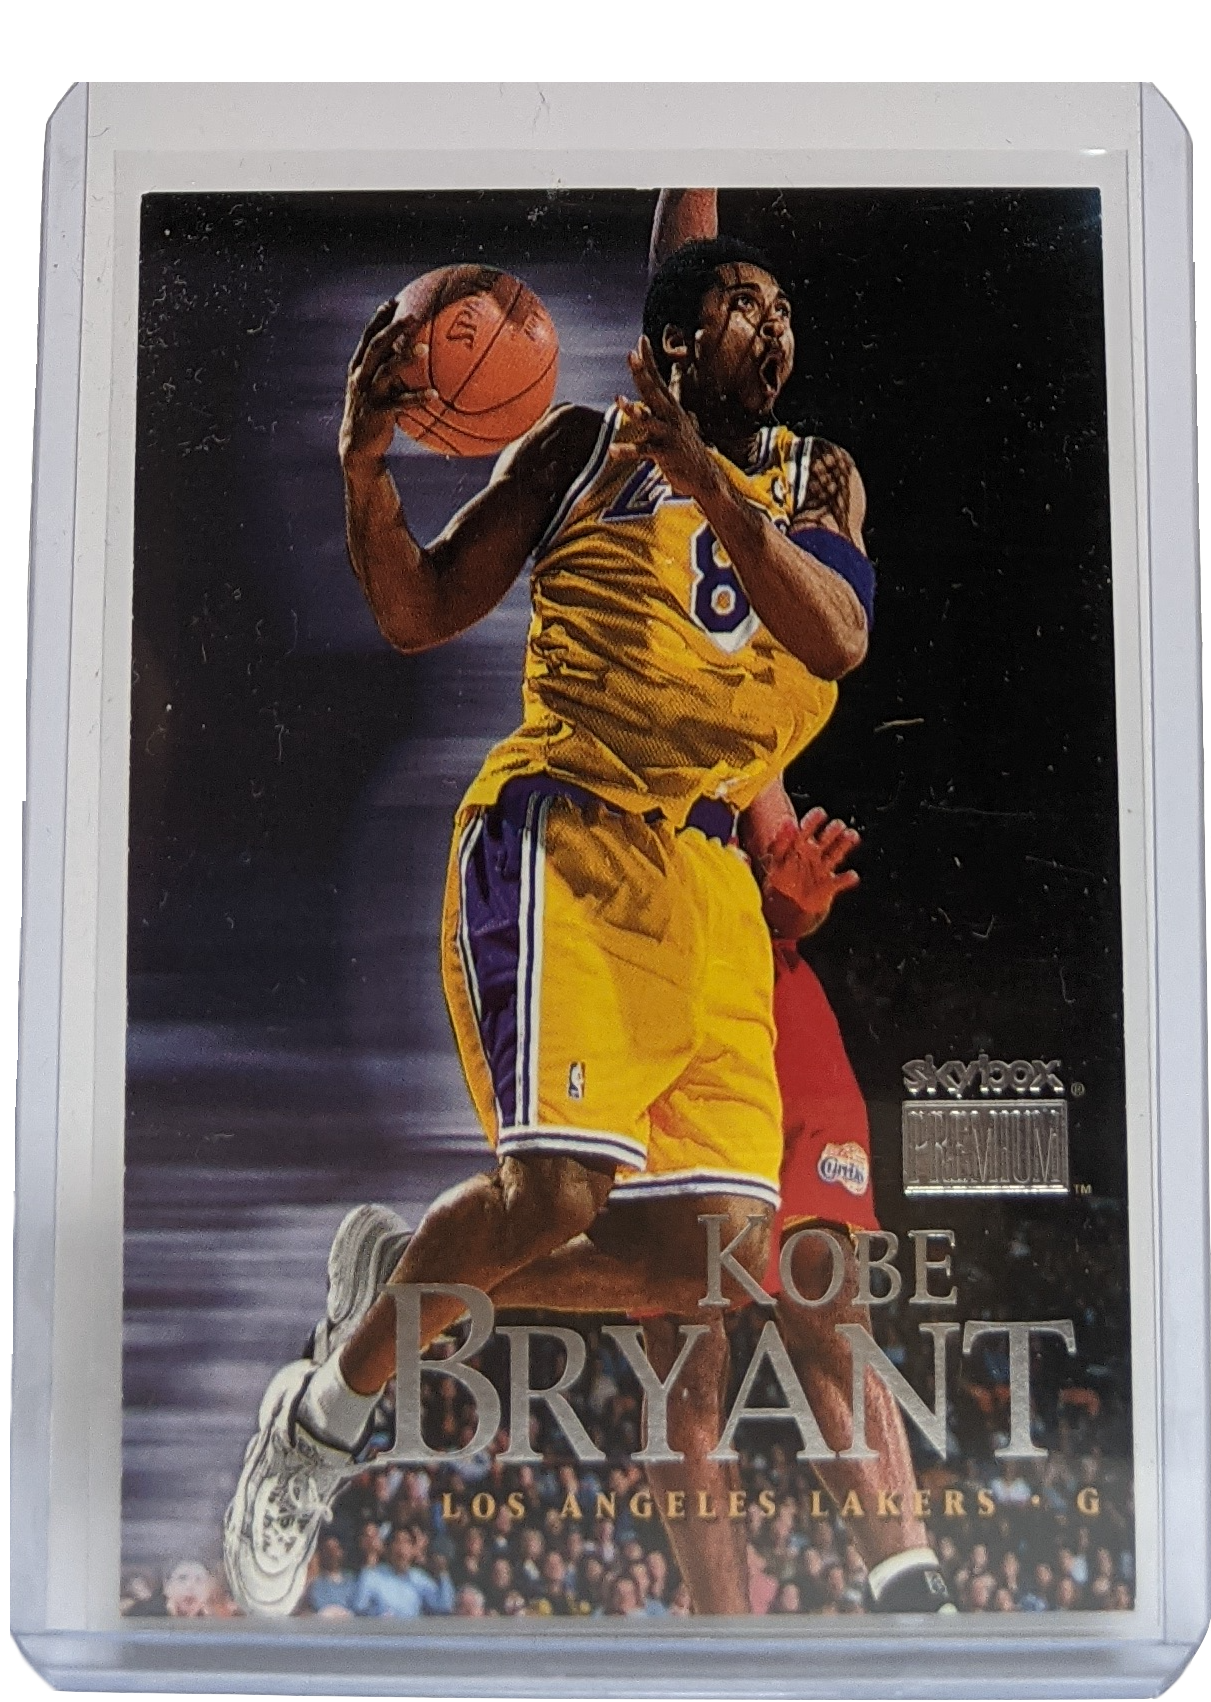 KOBE BRYANT ROOKIE CARD Lower Merion HIGH SCHOOL BASKETBALL 1996 RC Lakers!